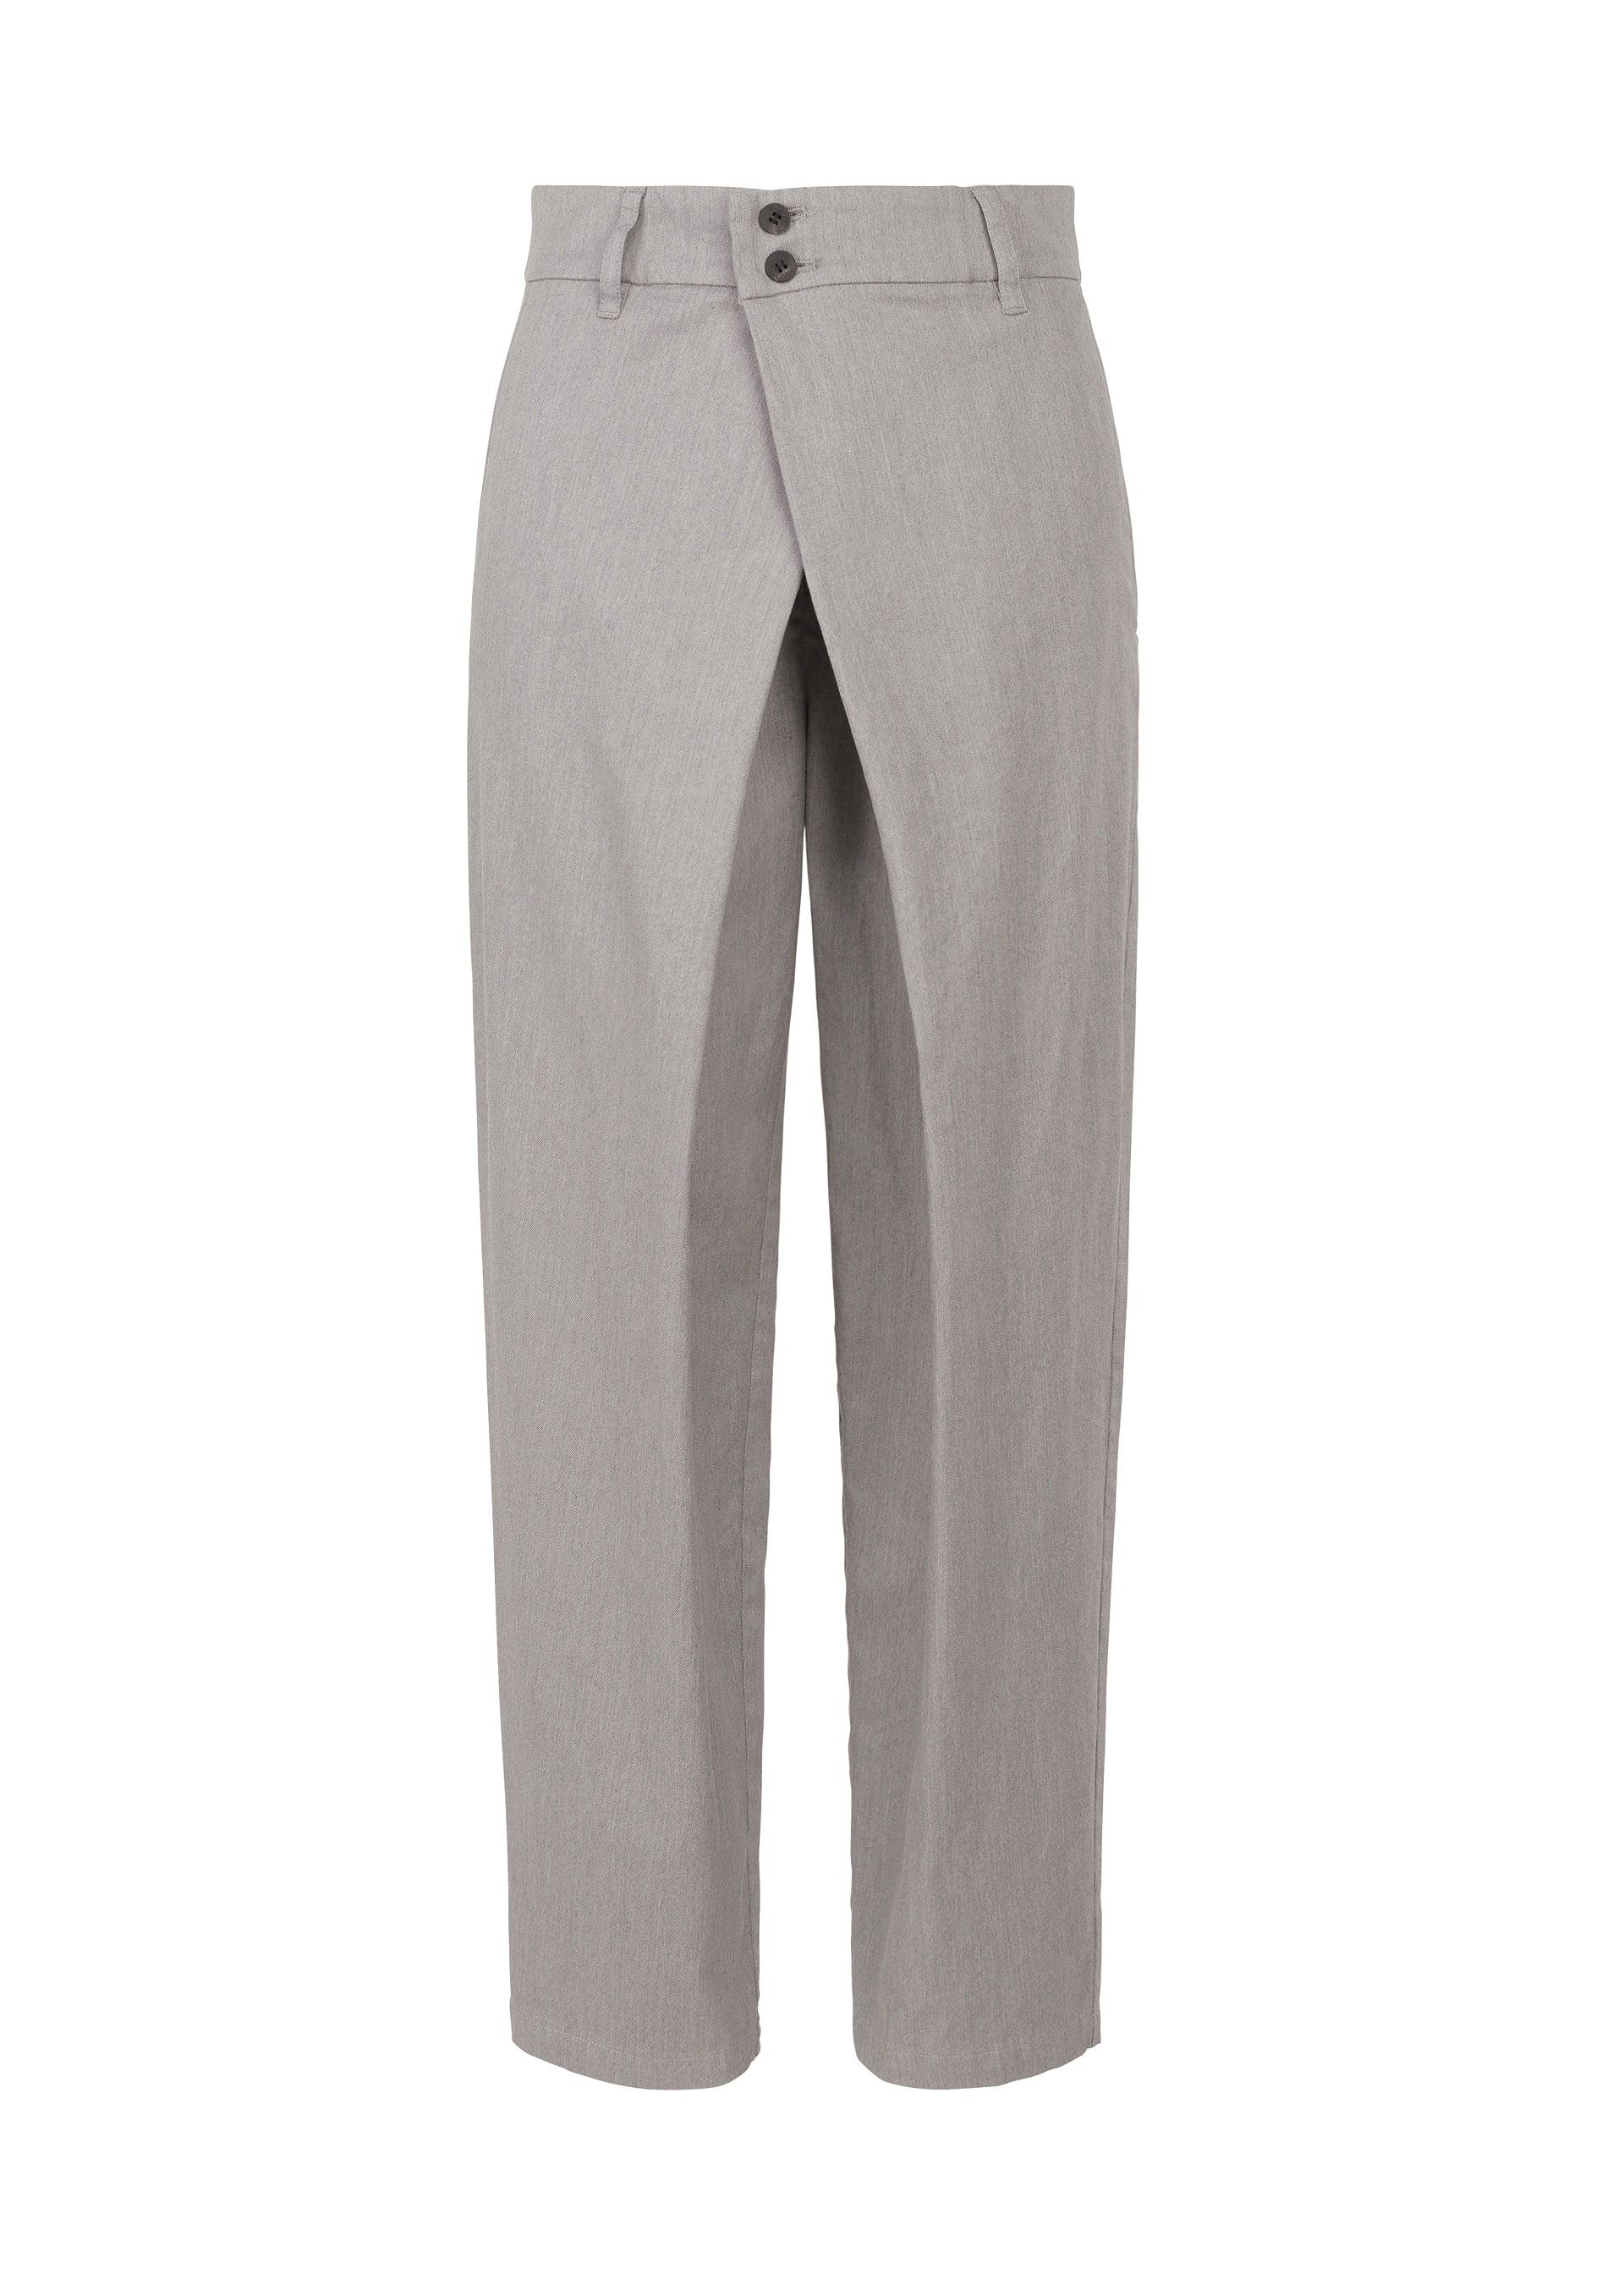 CHINO STRETCH BOTTOM Trousers Grey | ISSEY MIYAKE ONLINE STORE UK